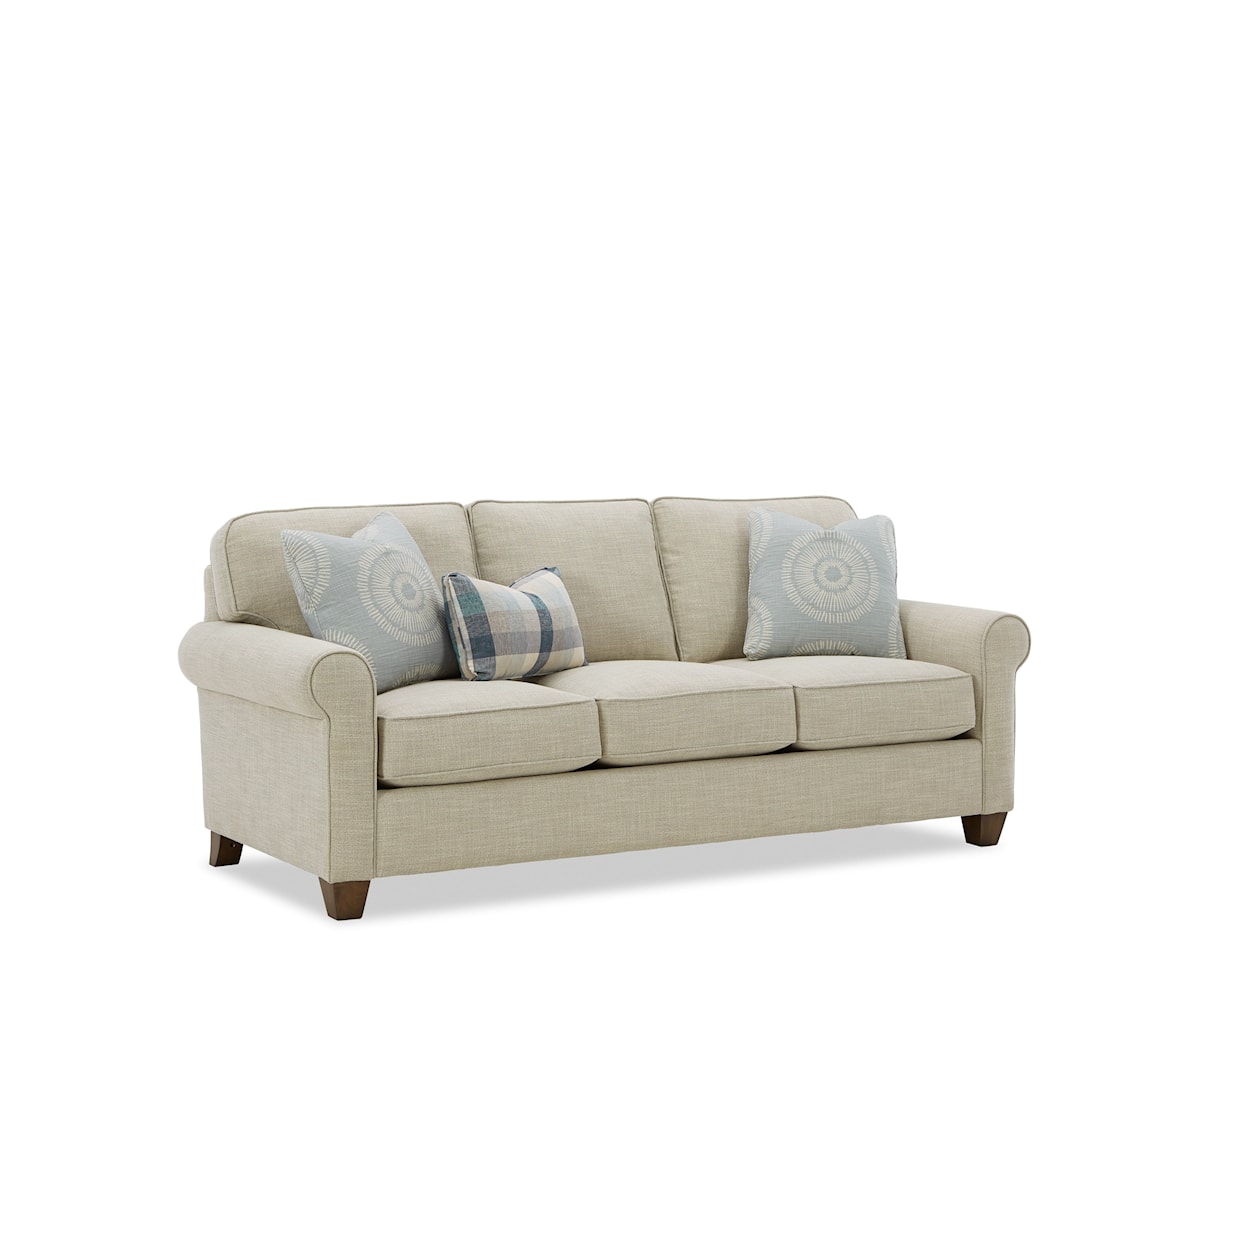 Hickory Craft 717450 Queen Sleeper Sofa